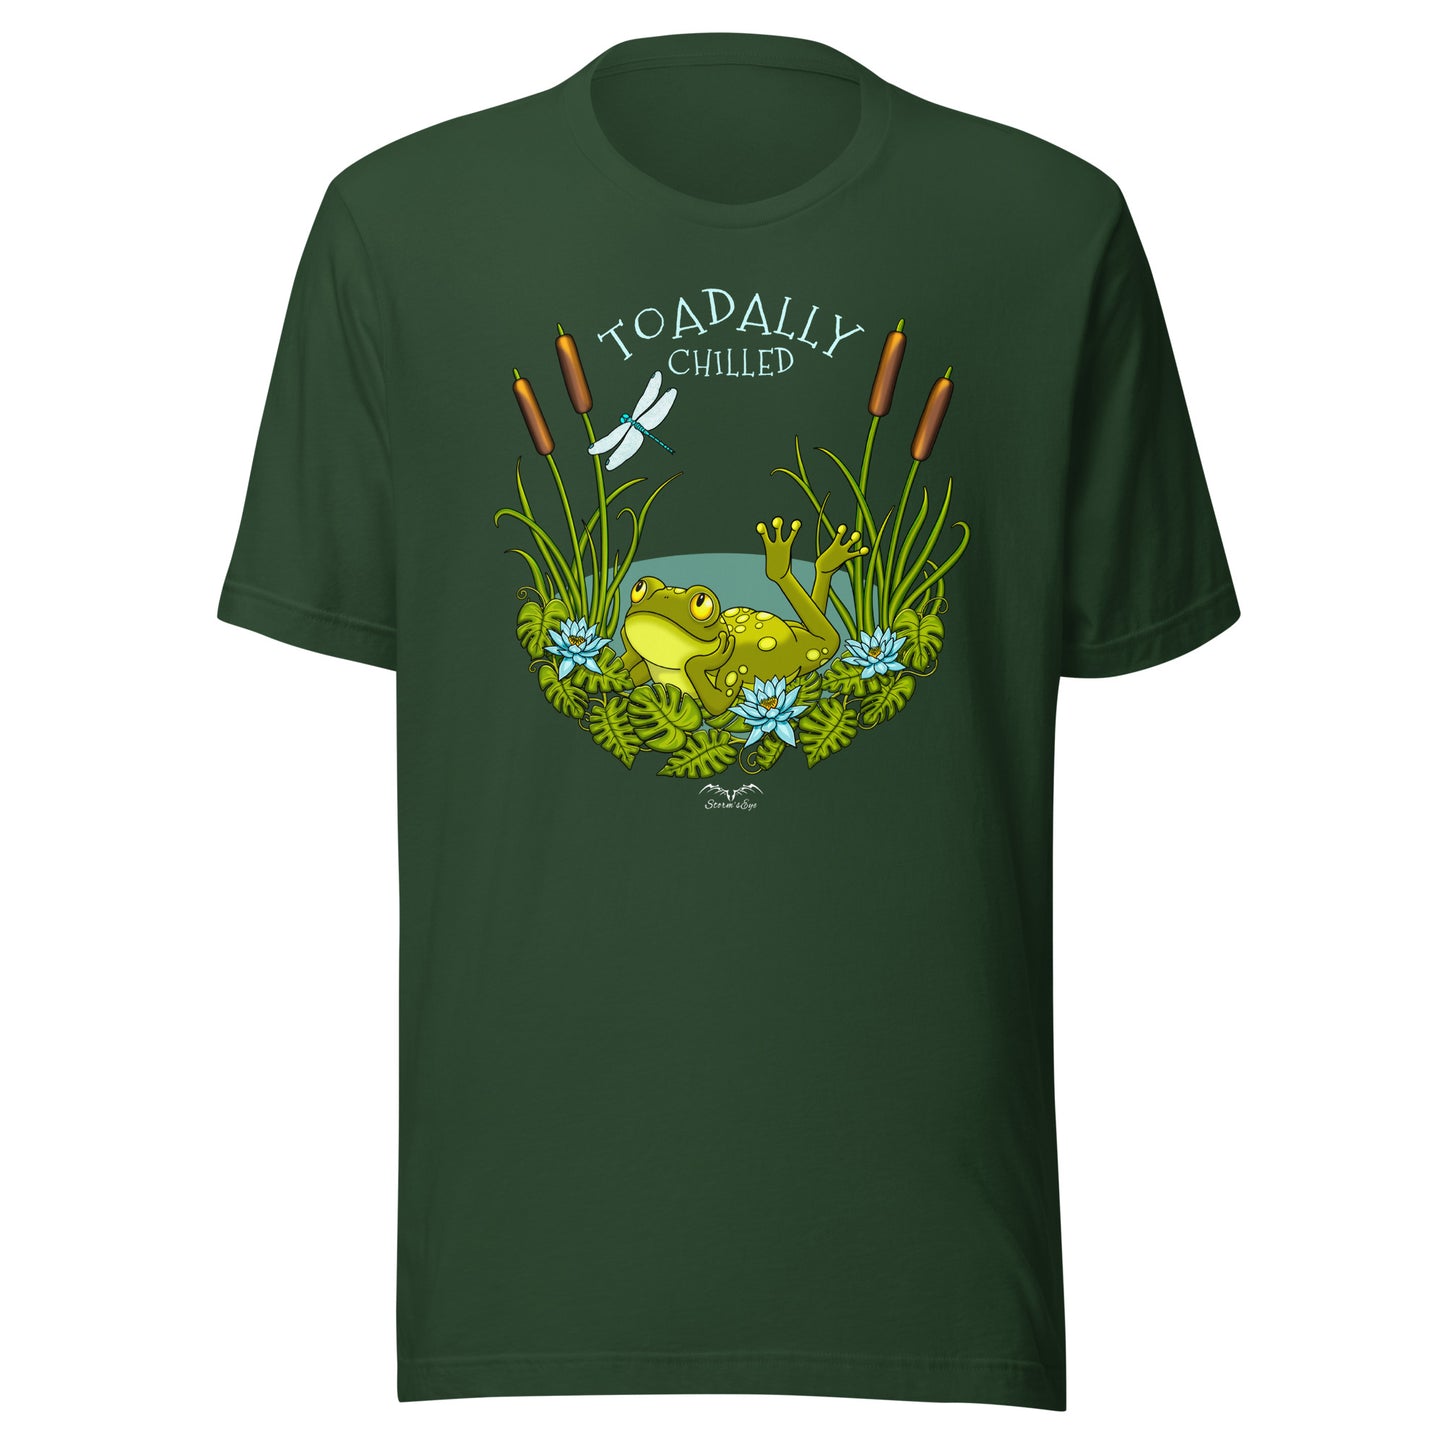 stormseye design toadally chilled T shirt, flat view dark green